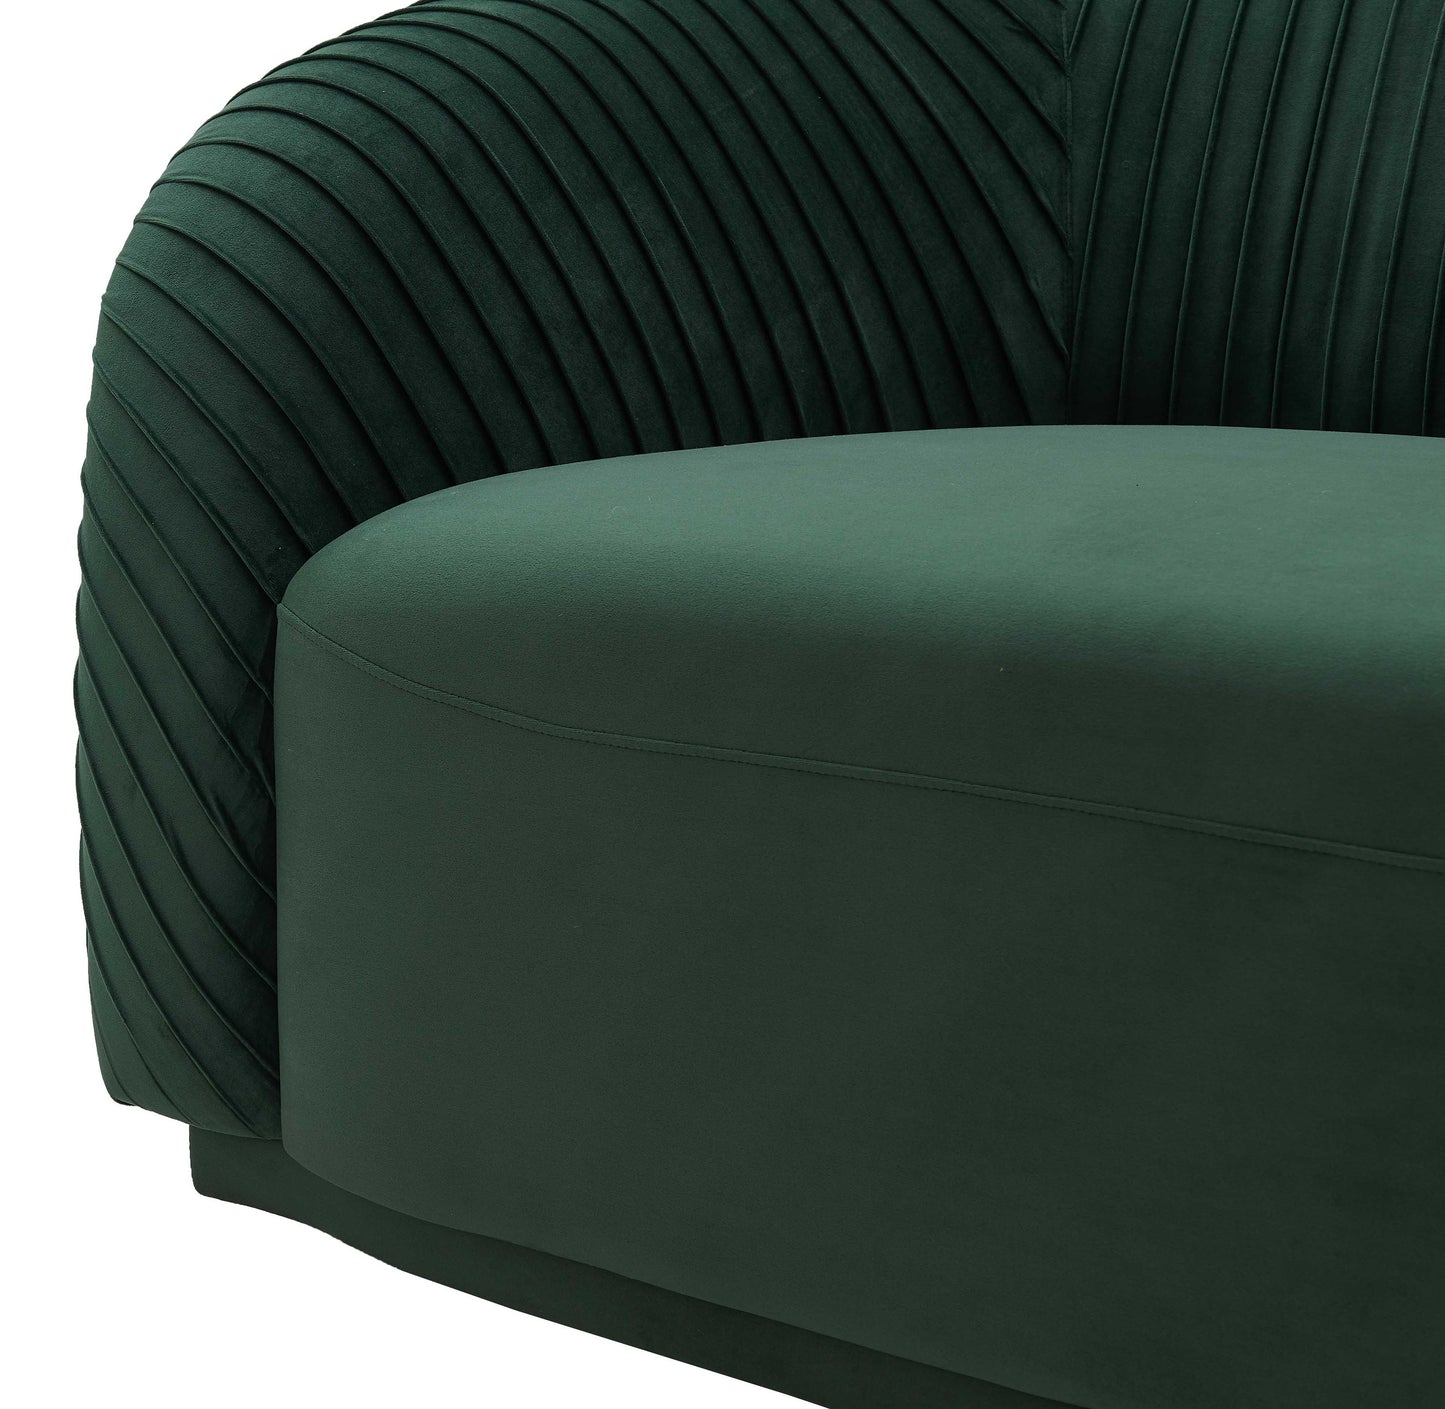 Yara Pleated Forest Green Velvet Sofa by TOV